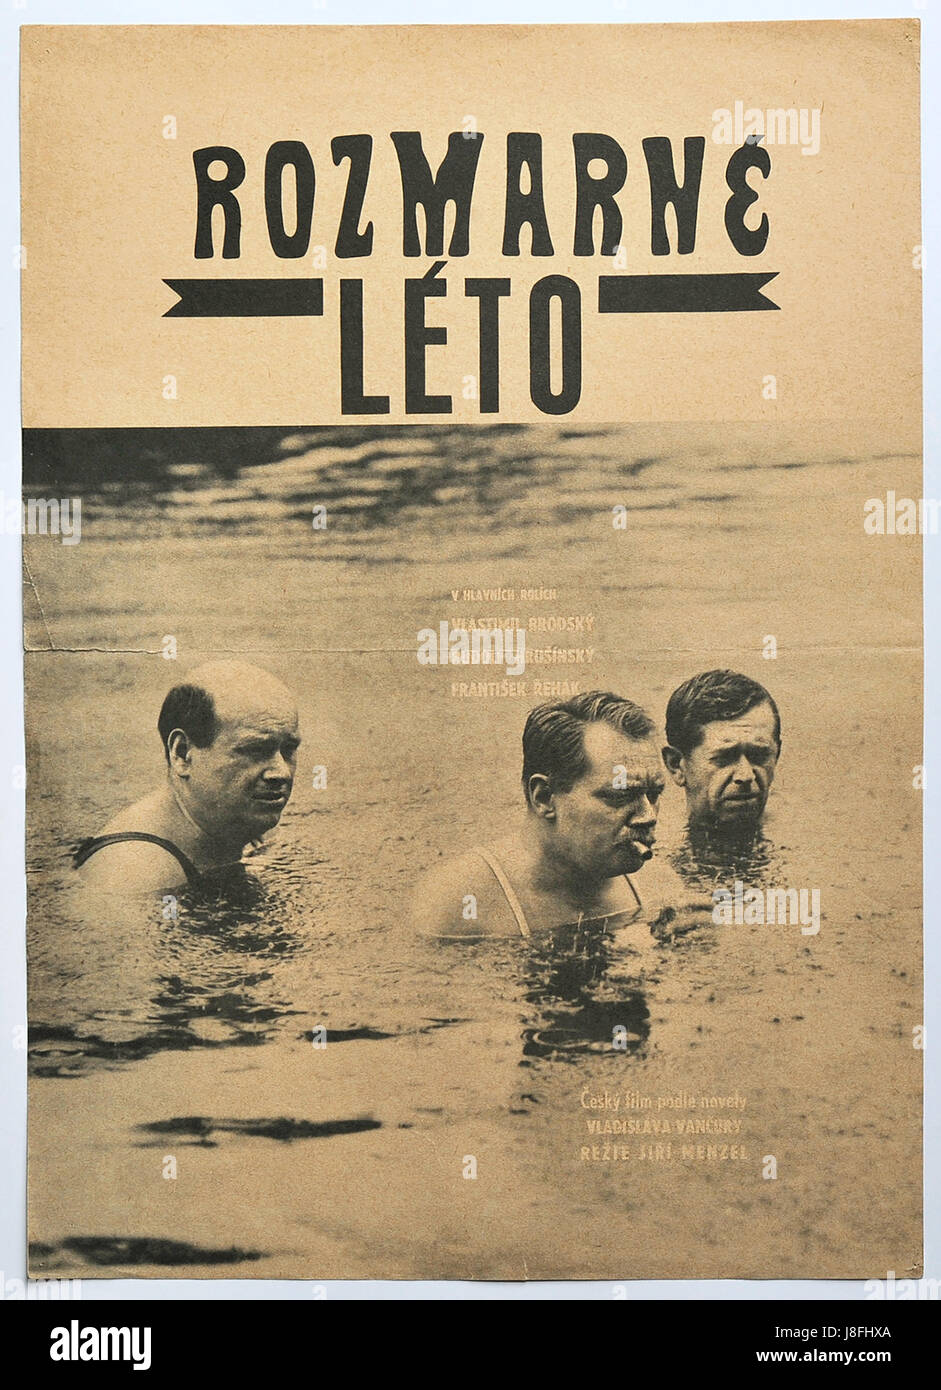 Capricious Summer. Original movie poster, 1968. Director: Jiri Menzel - Czechoslovak New Wave. Stock Photo